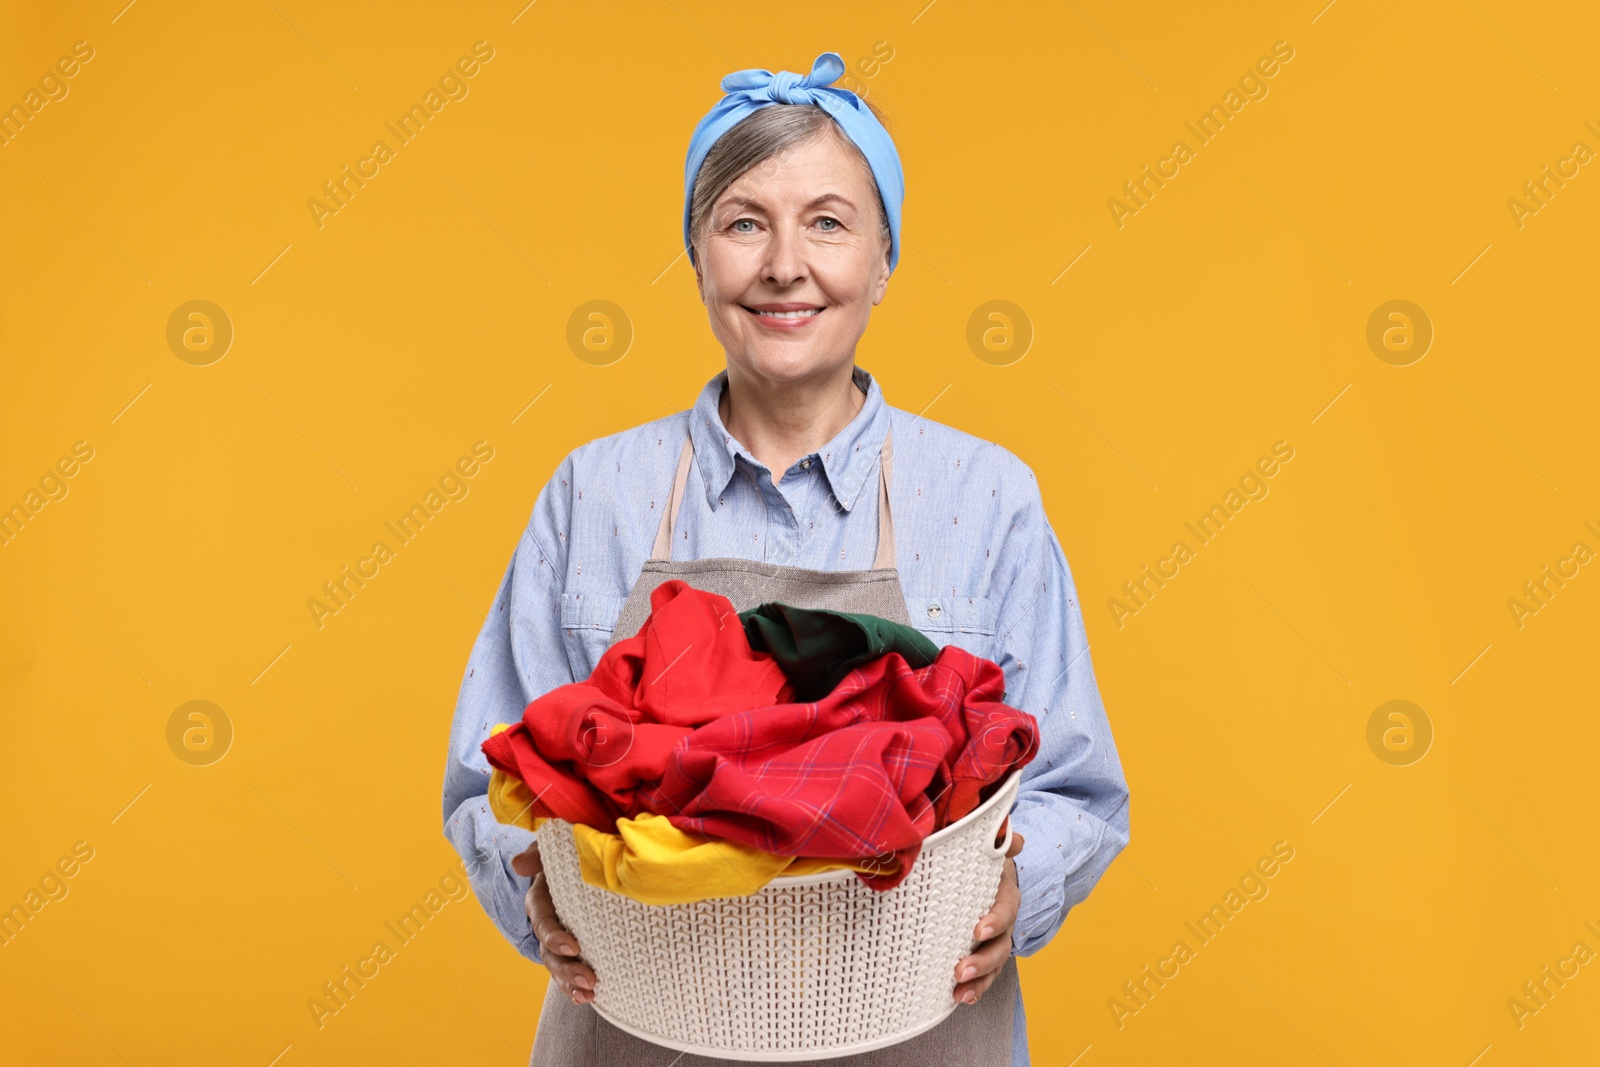 Photo of Happy housewife with basket full of laundry on orange background